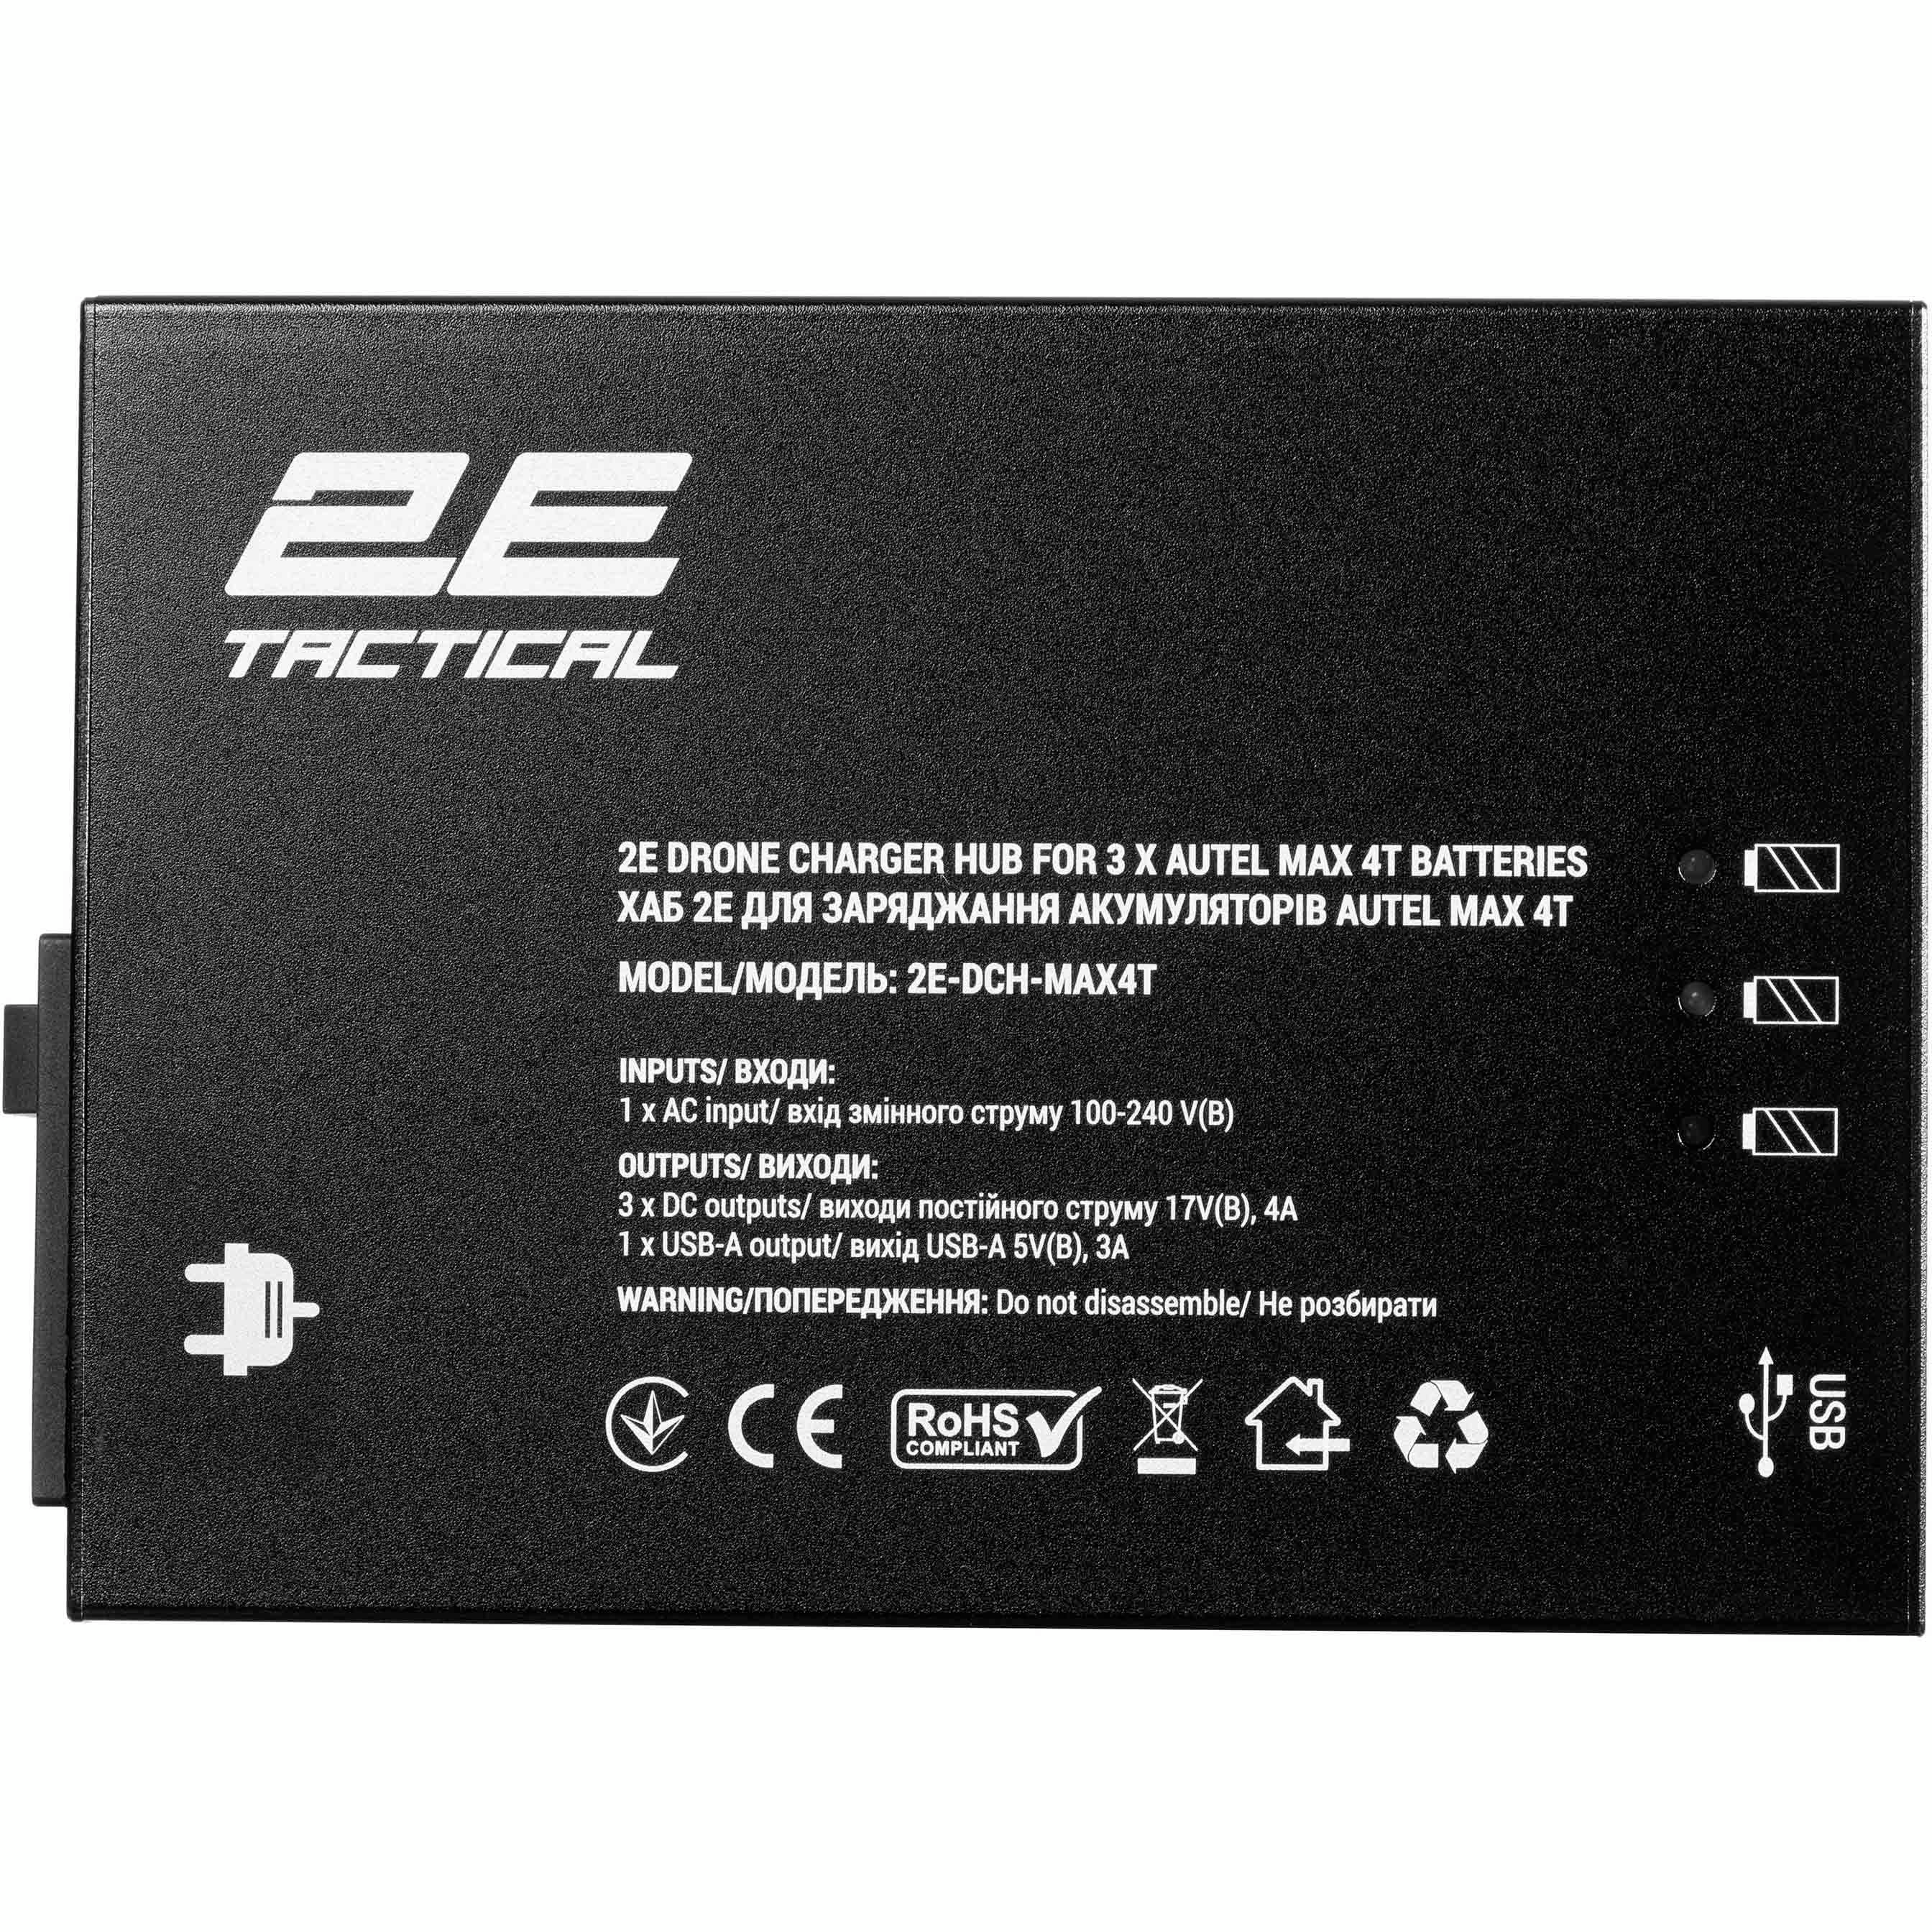 Хаб 2E для зарядки аккумуляторов EVO Max 4T (2E-DCH-MAX4T) фото 1